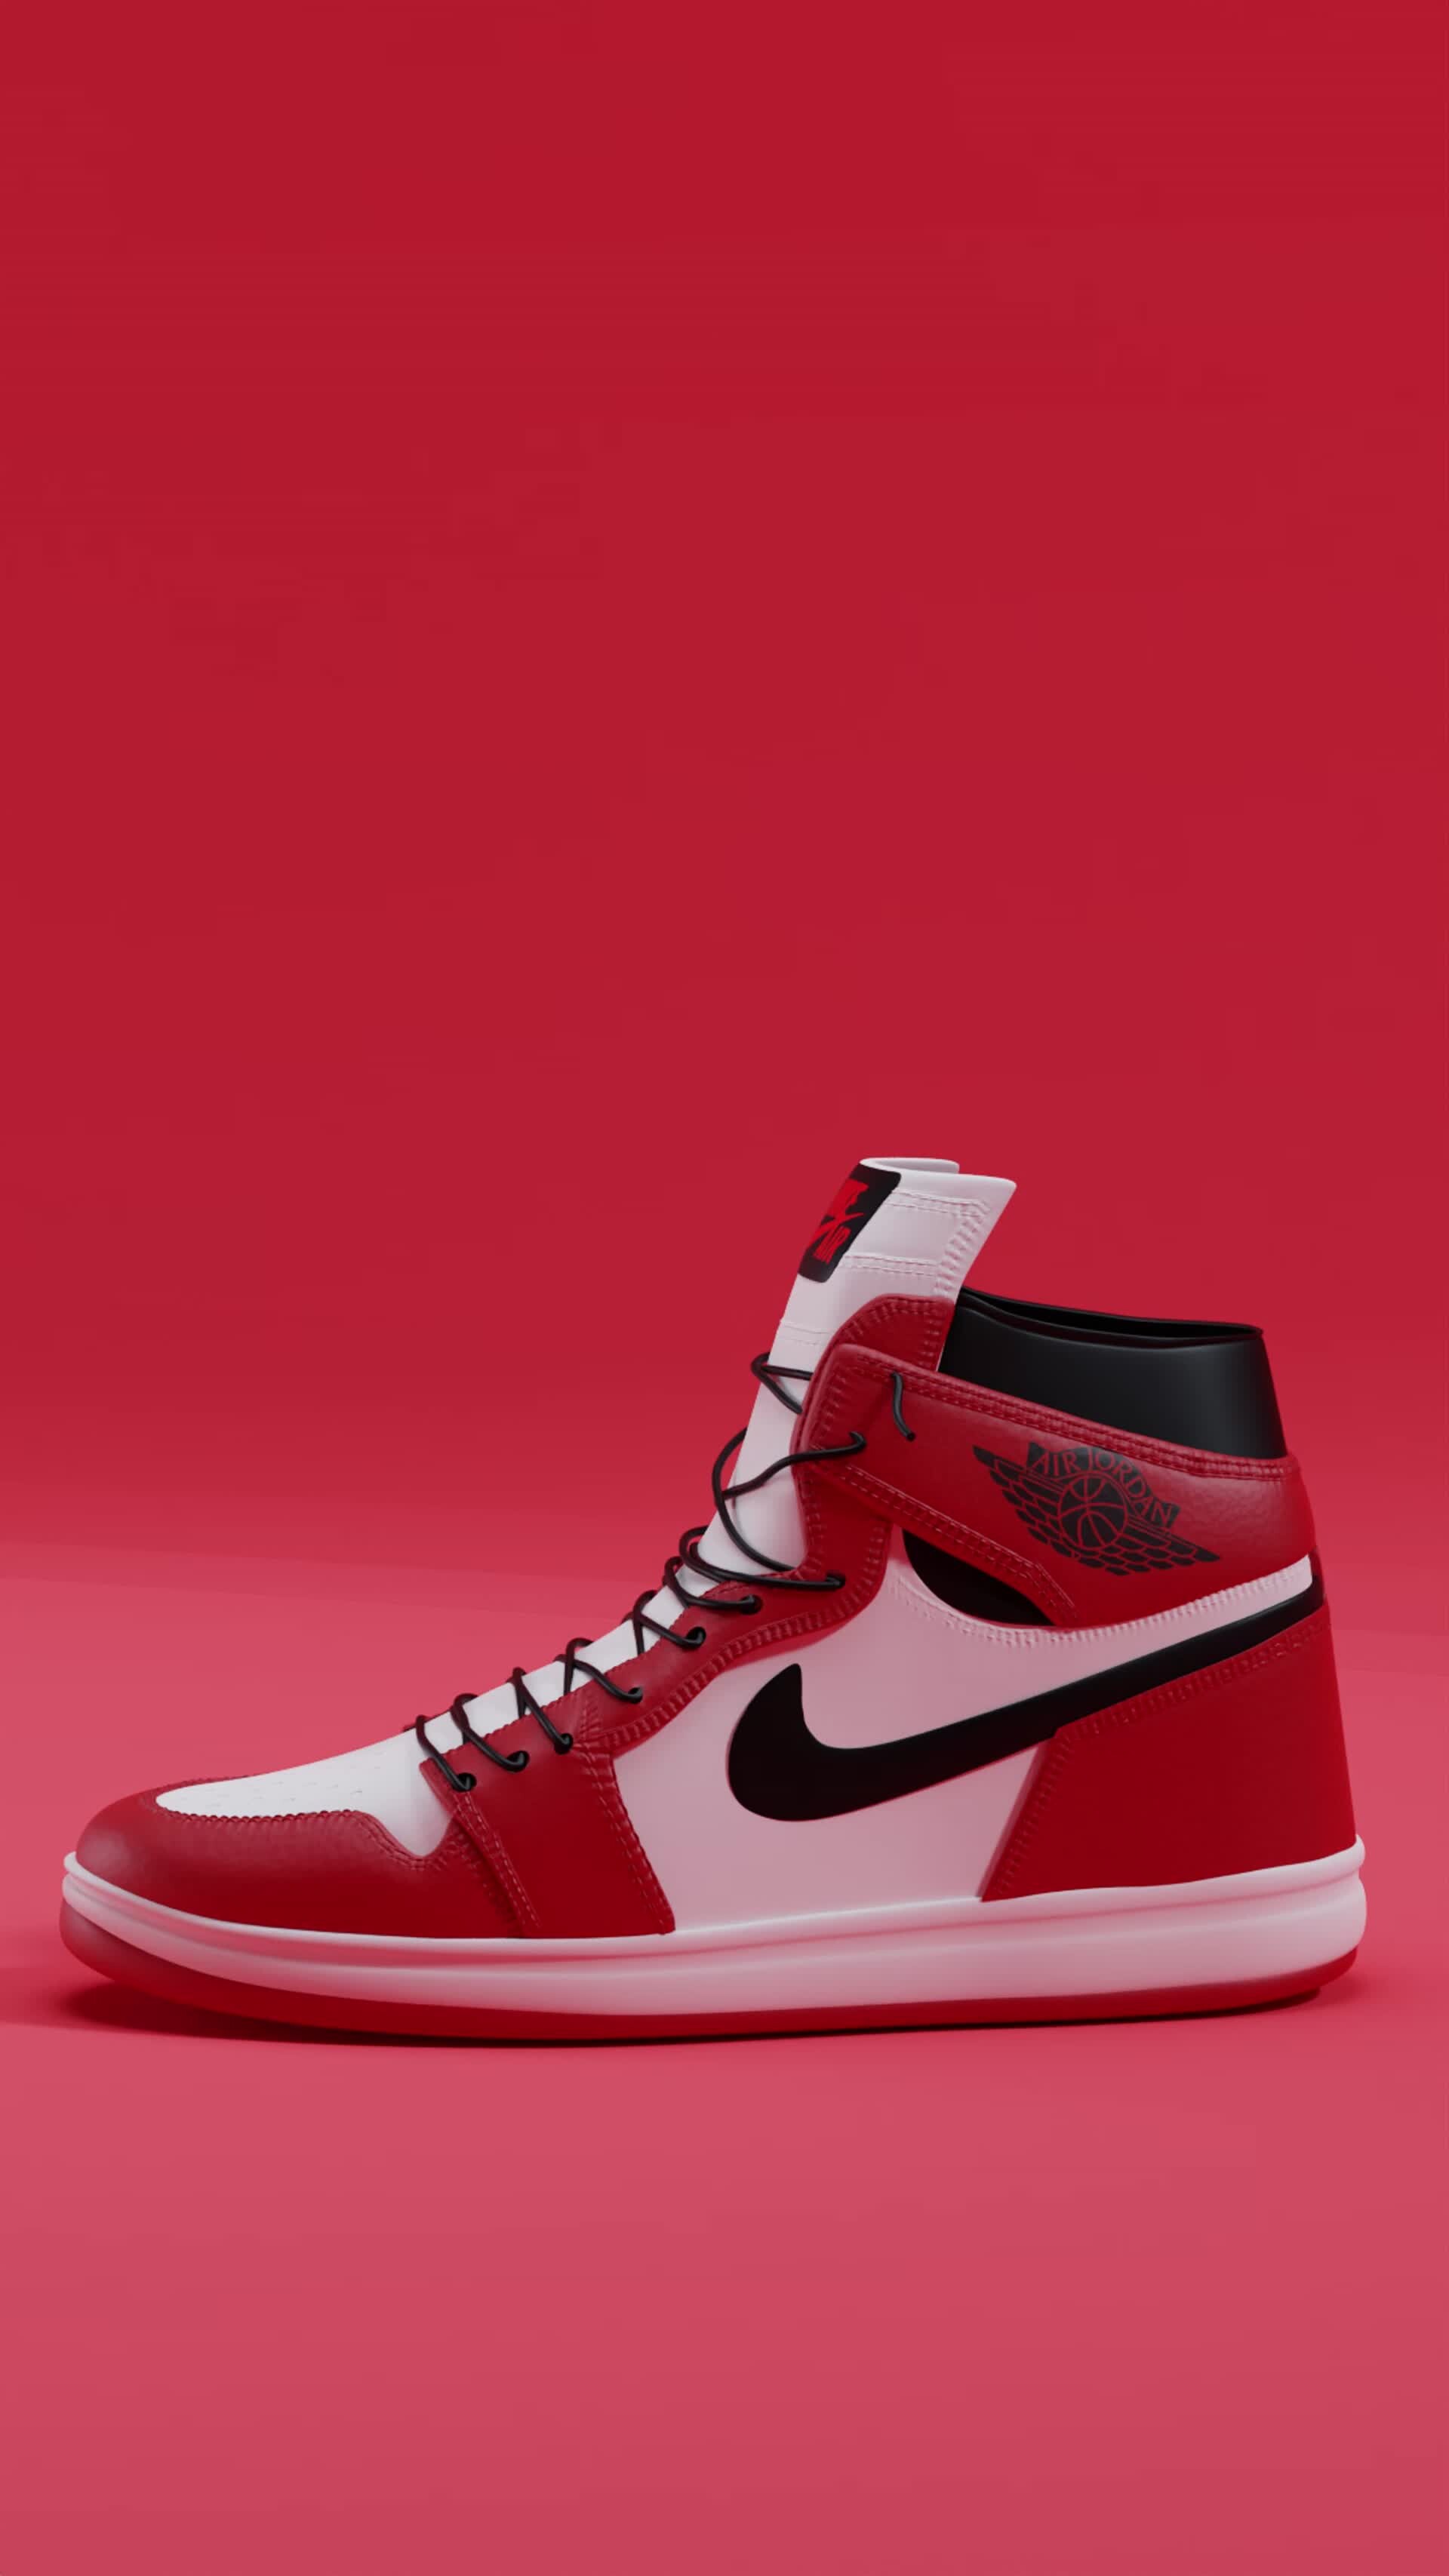 ArtStation - Nike Air Jordan Chicago